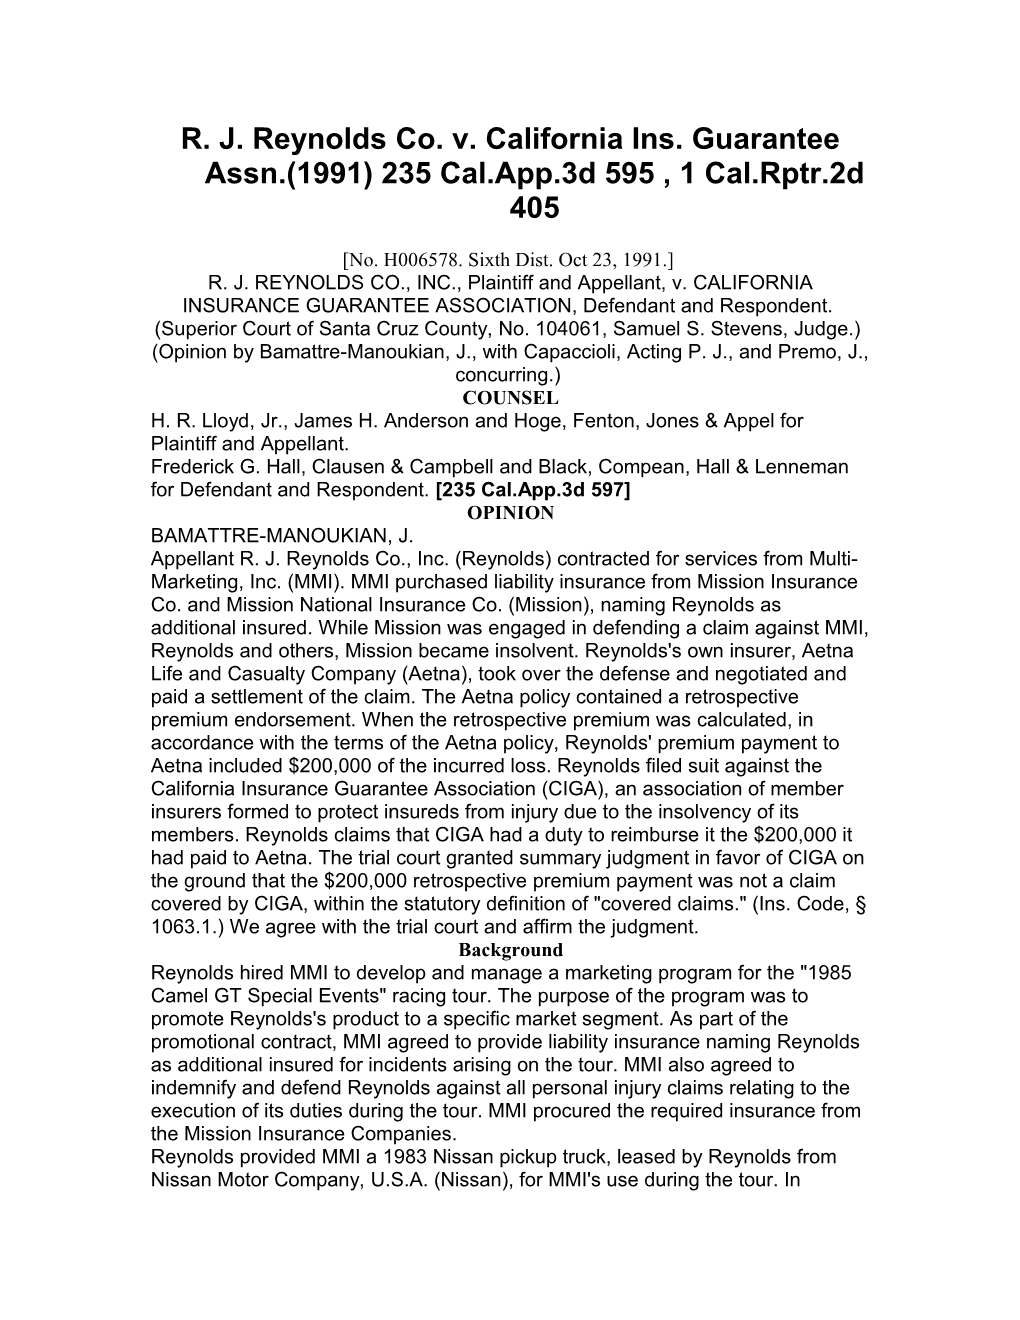 R. J. Reynolds Co. V. California Ins. Guarantee Assn.(1991) 235 Cal.App.3D 595 , 1 Cal.Rptr.2D